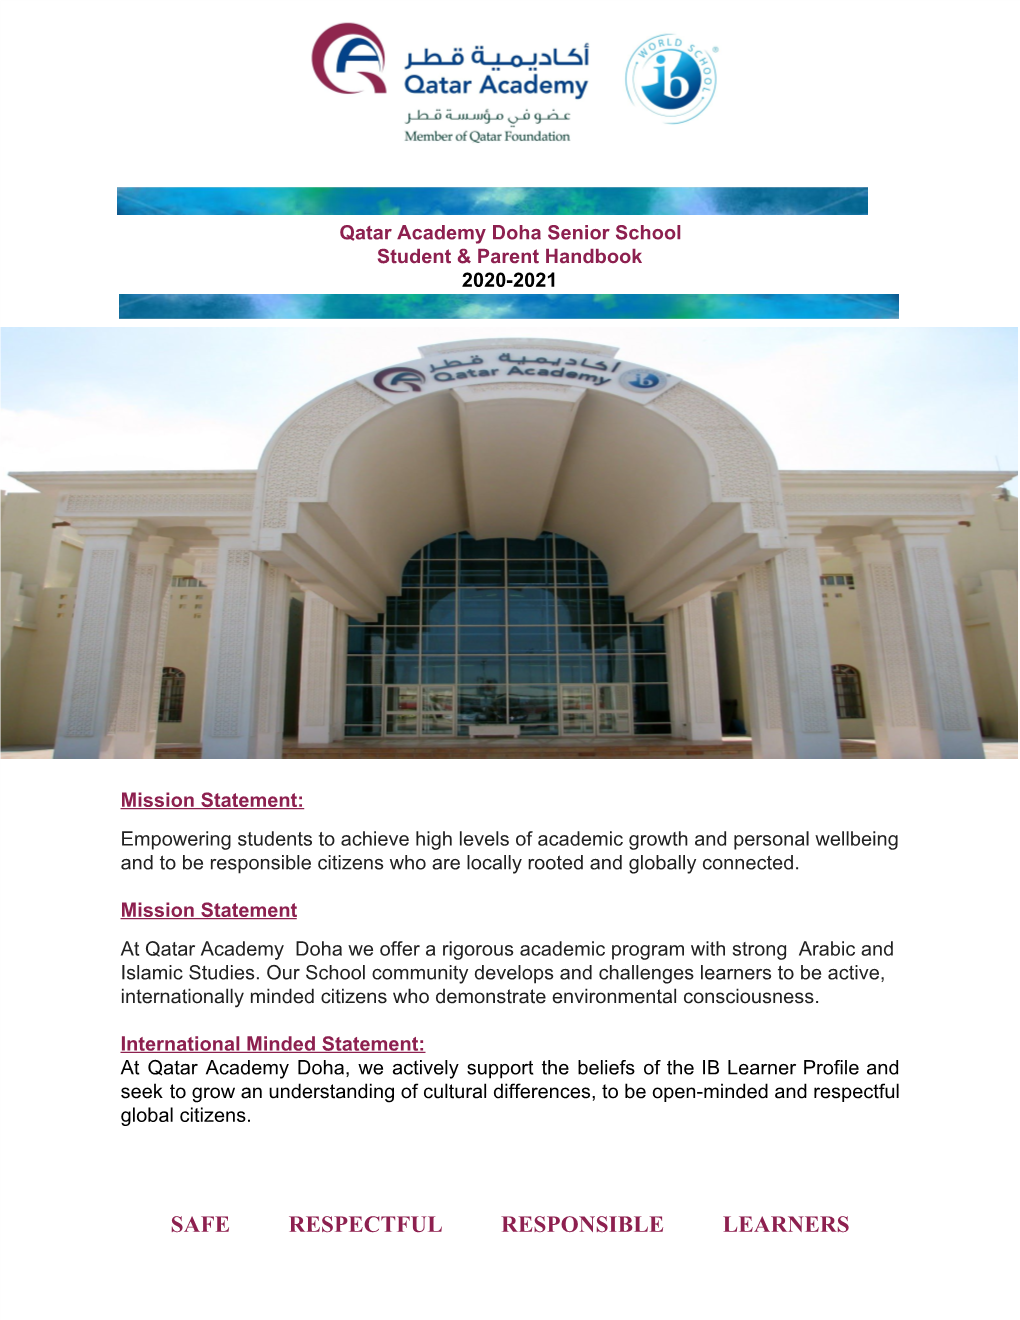 Qatar Academy Doha Senior School Student & Parent Handbook